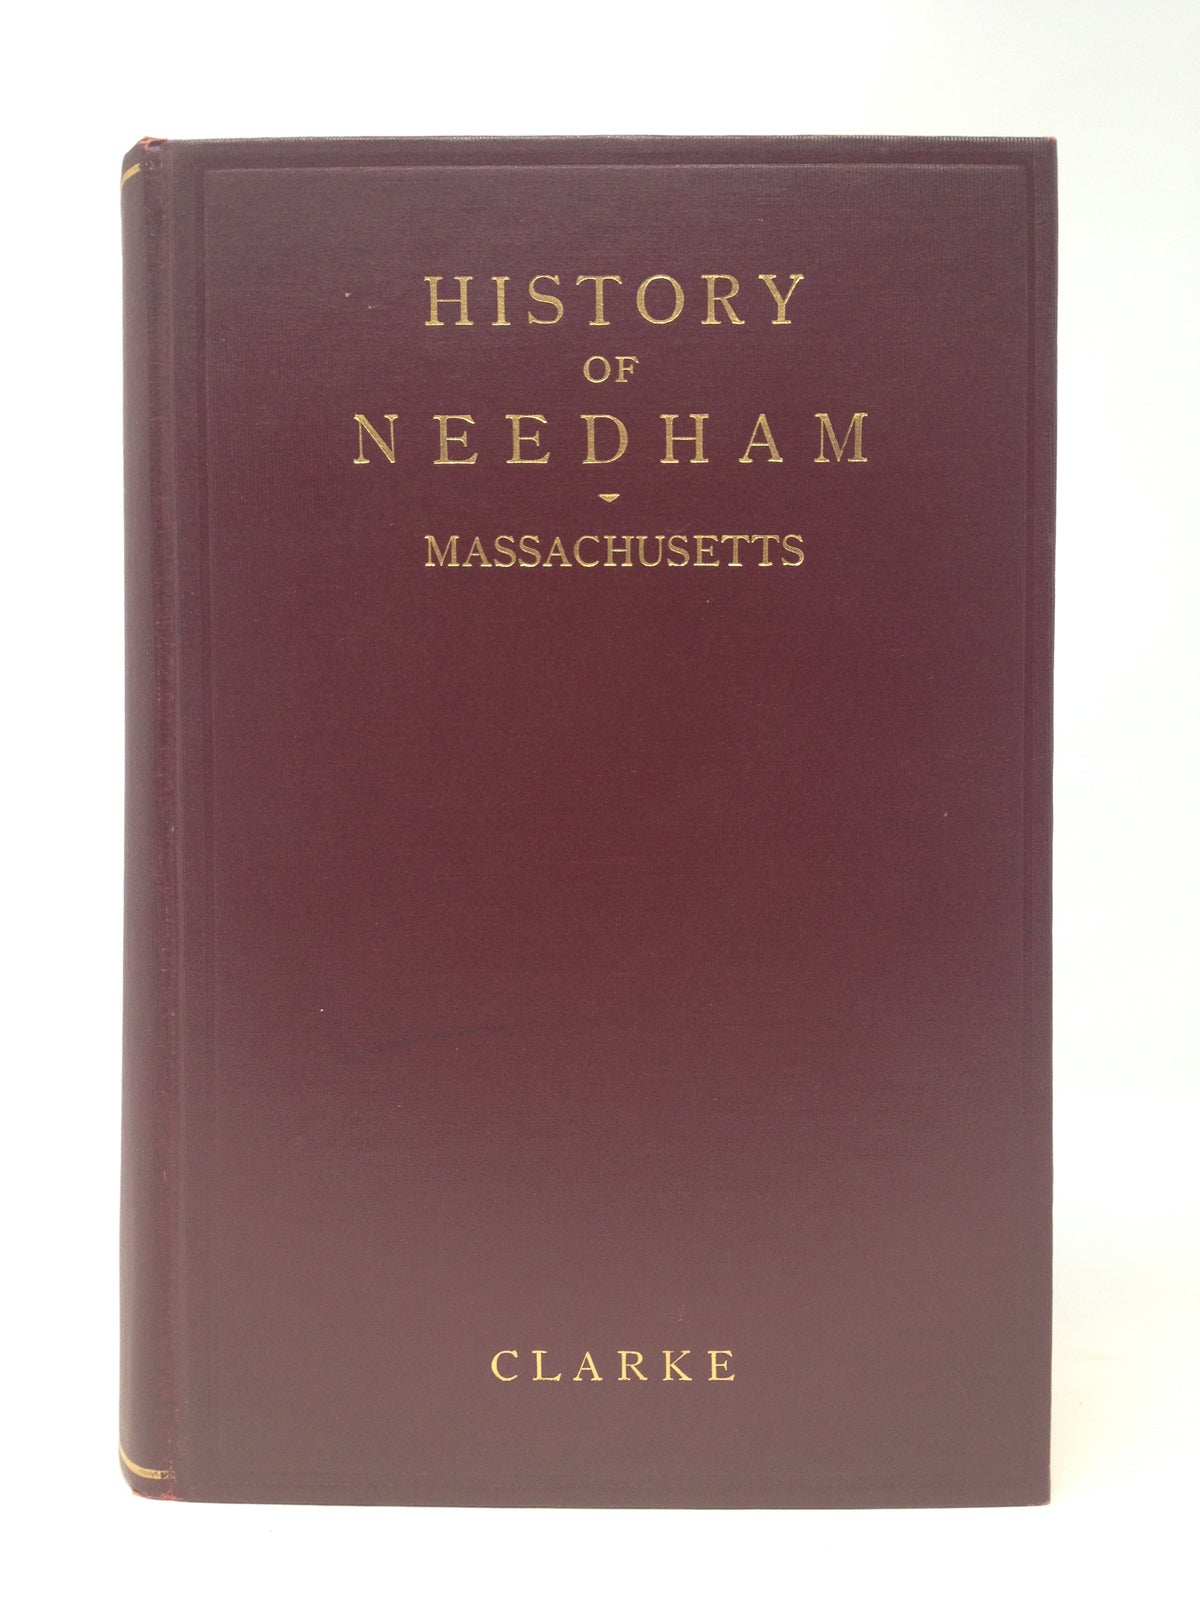 Clarke, George Kuhn - History of Needham, Massachusetts 1711-1911; Including West Needham, Now the Town of Wellesley